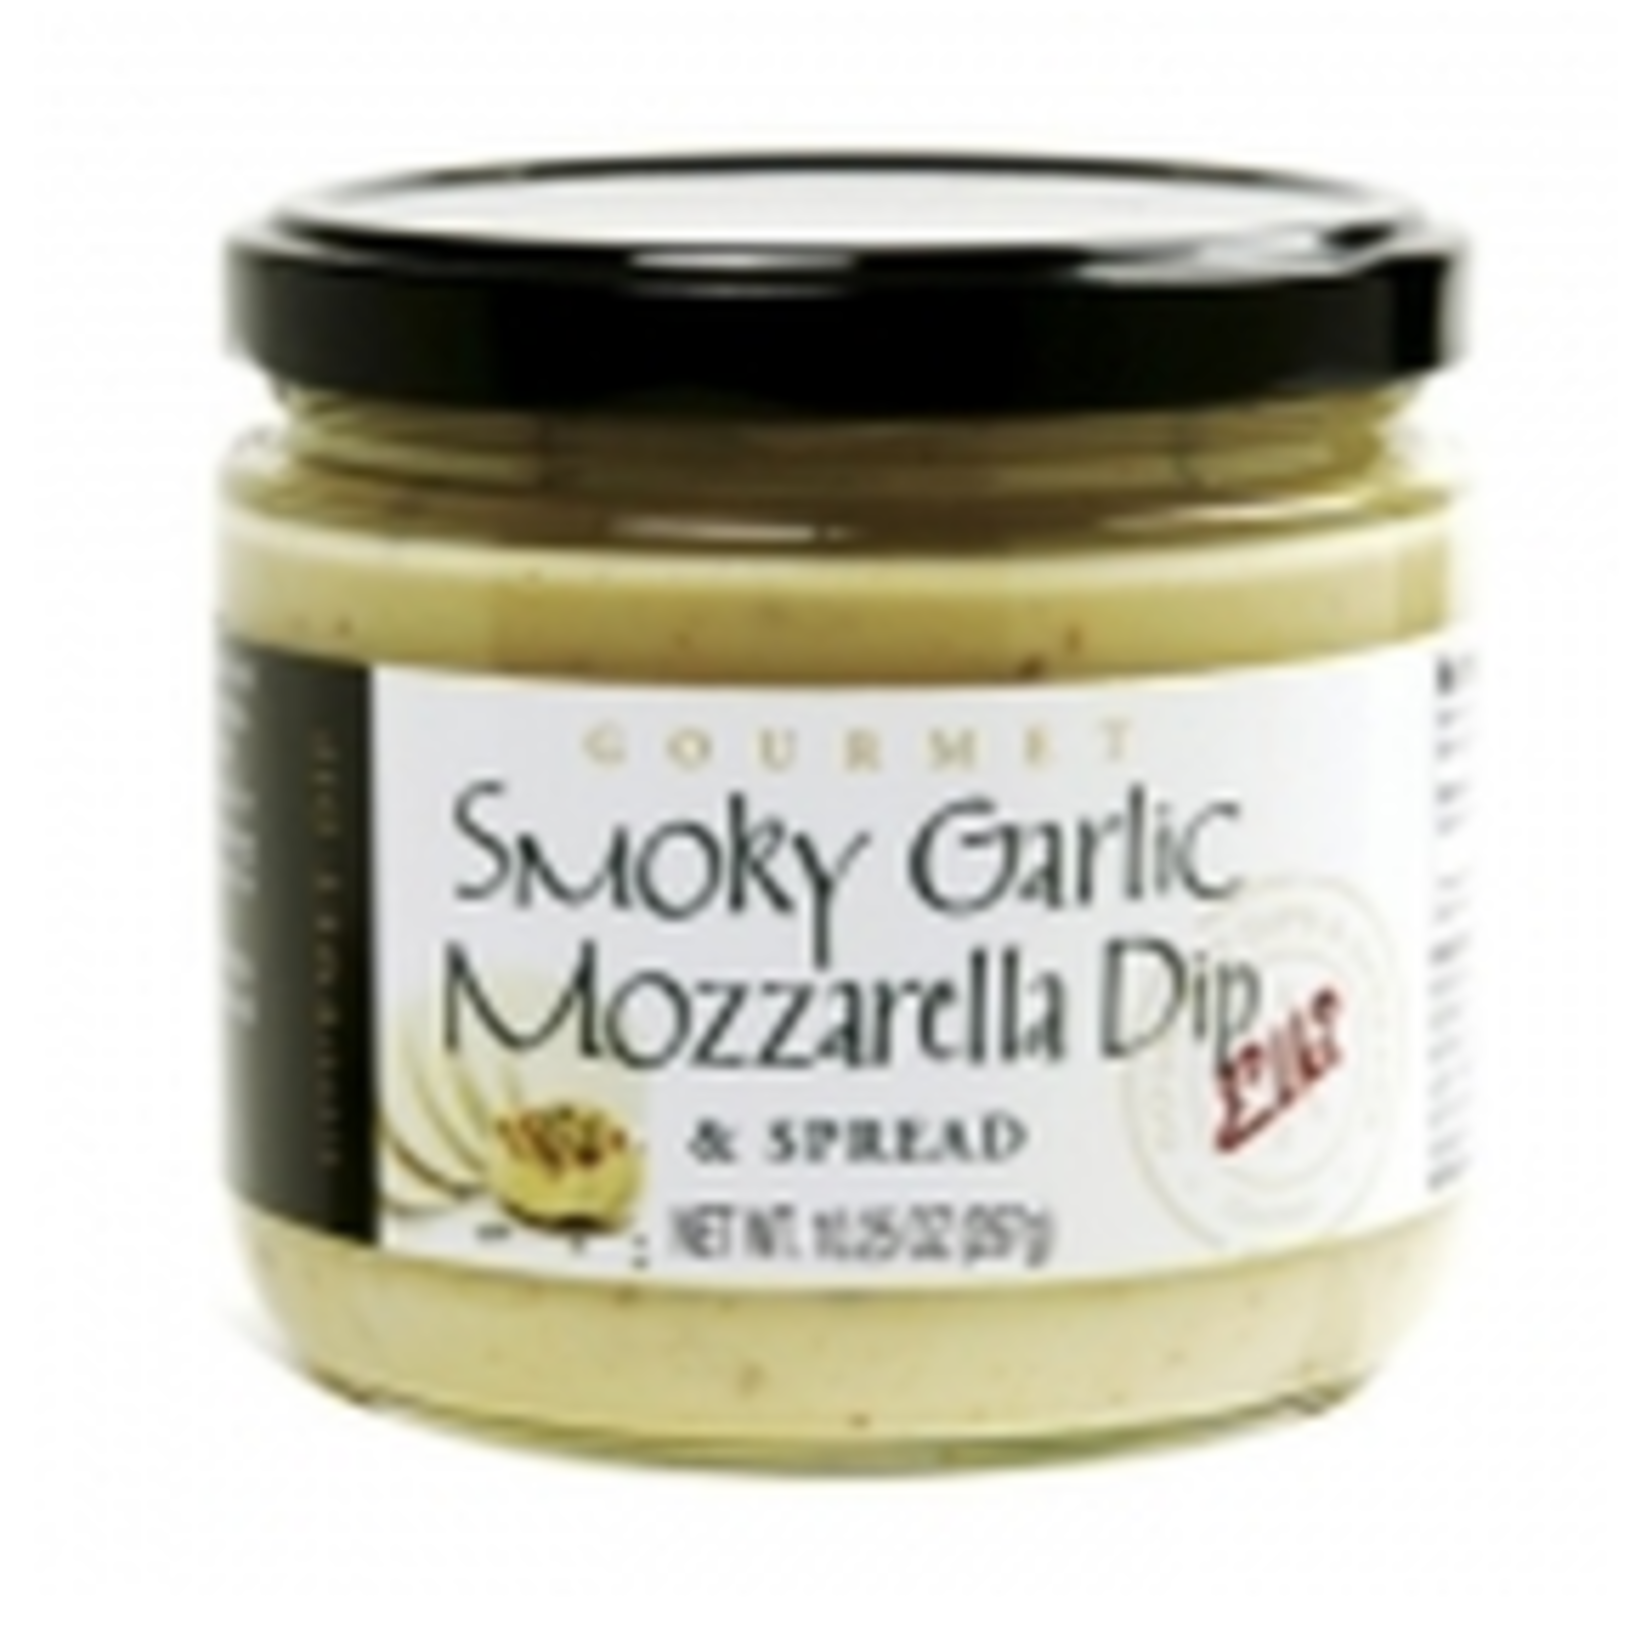 Elki Smoky Garlic Mozzarella Dip